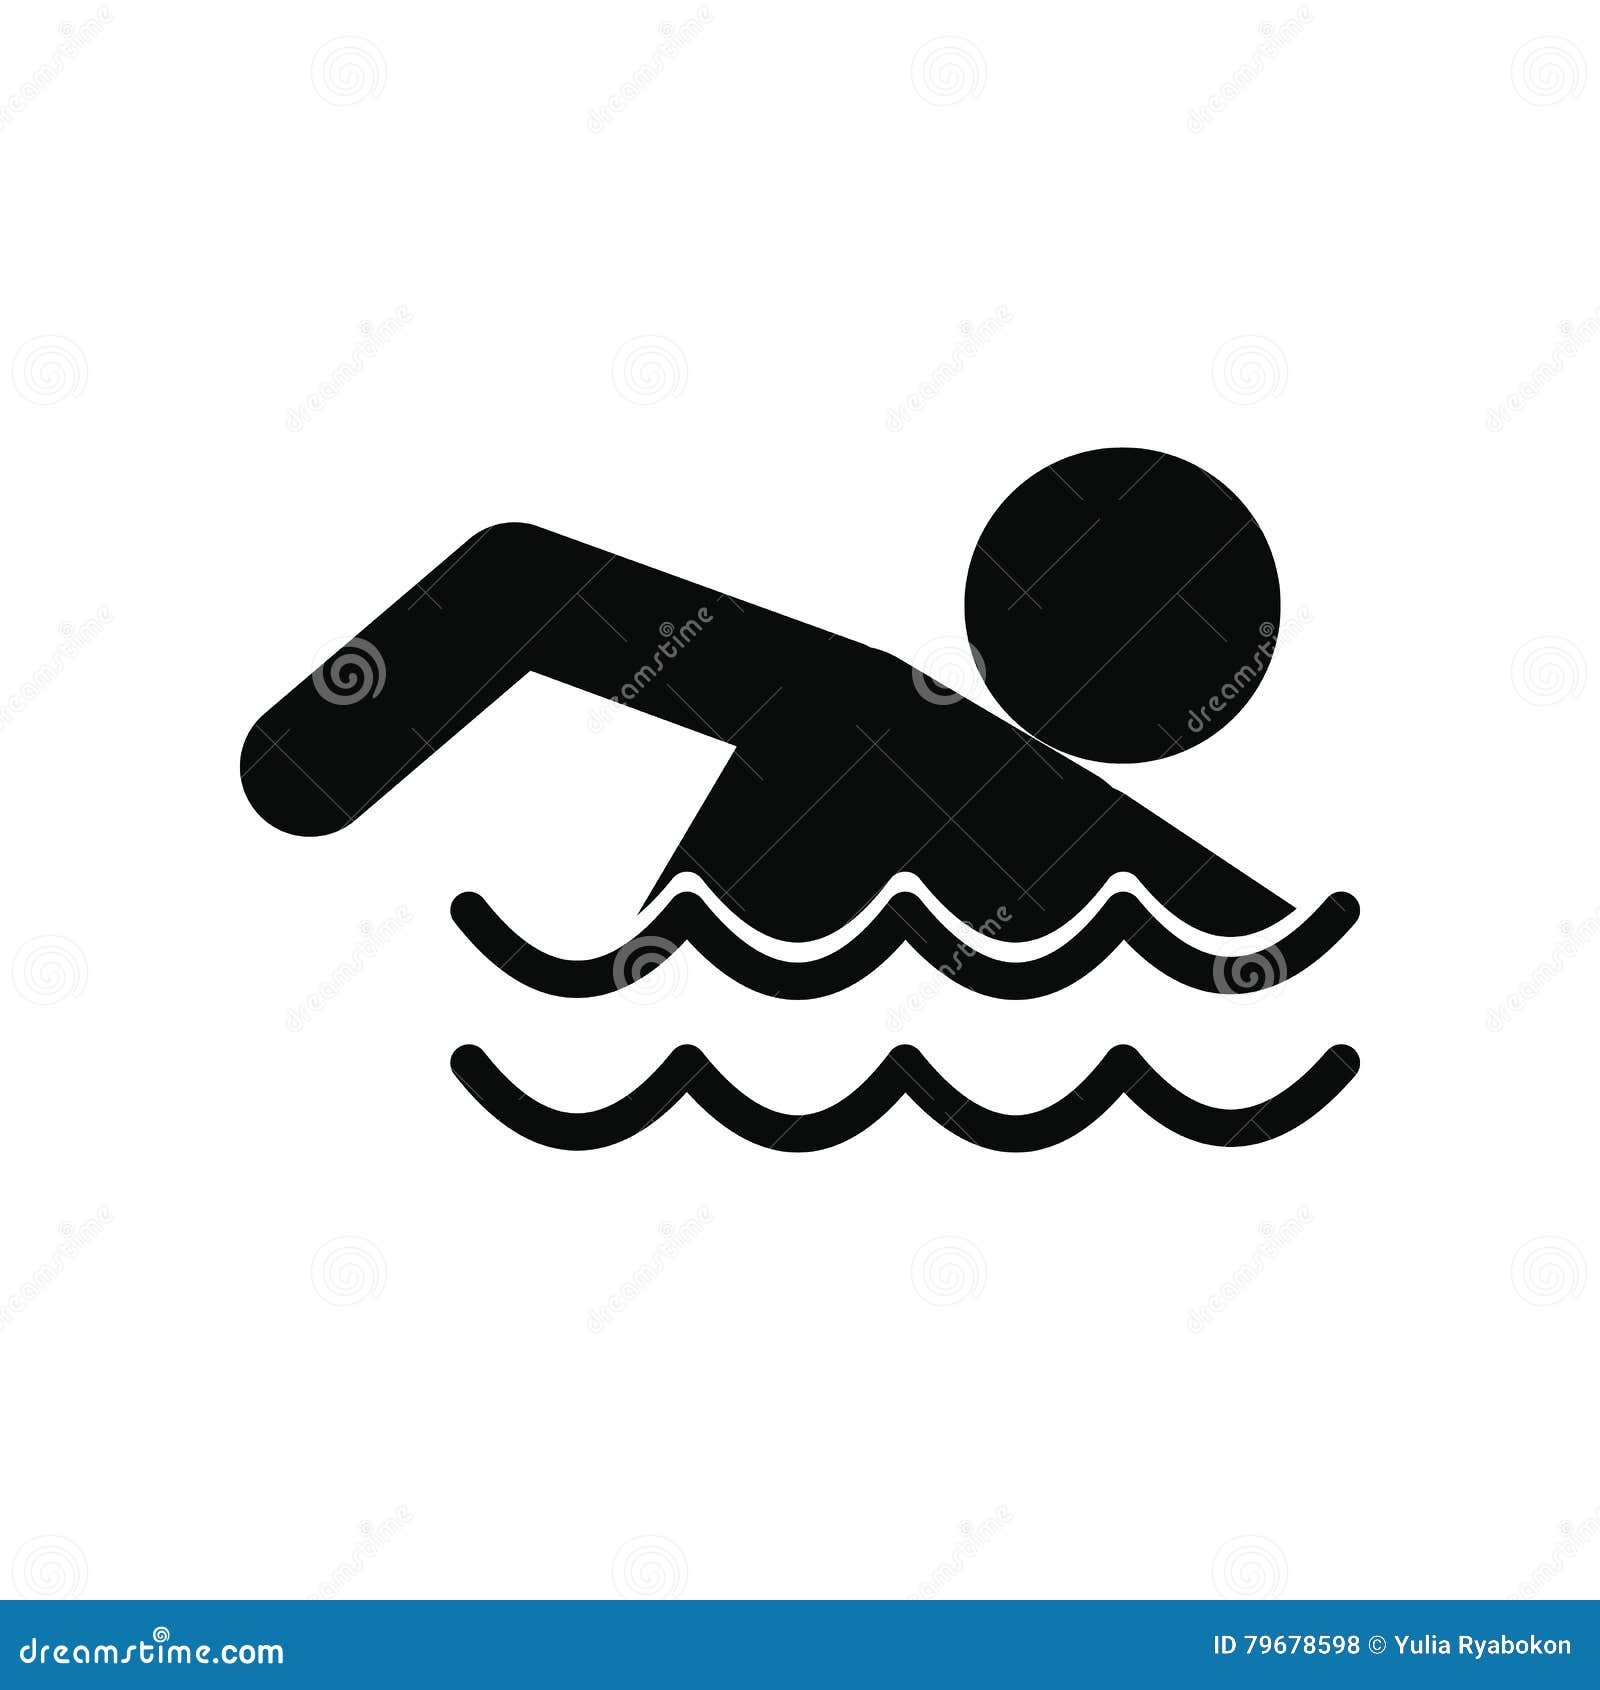 Swimmer black simple icon stock vector. Illustration of black - 79678598